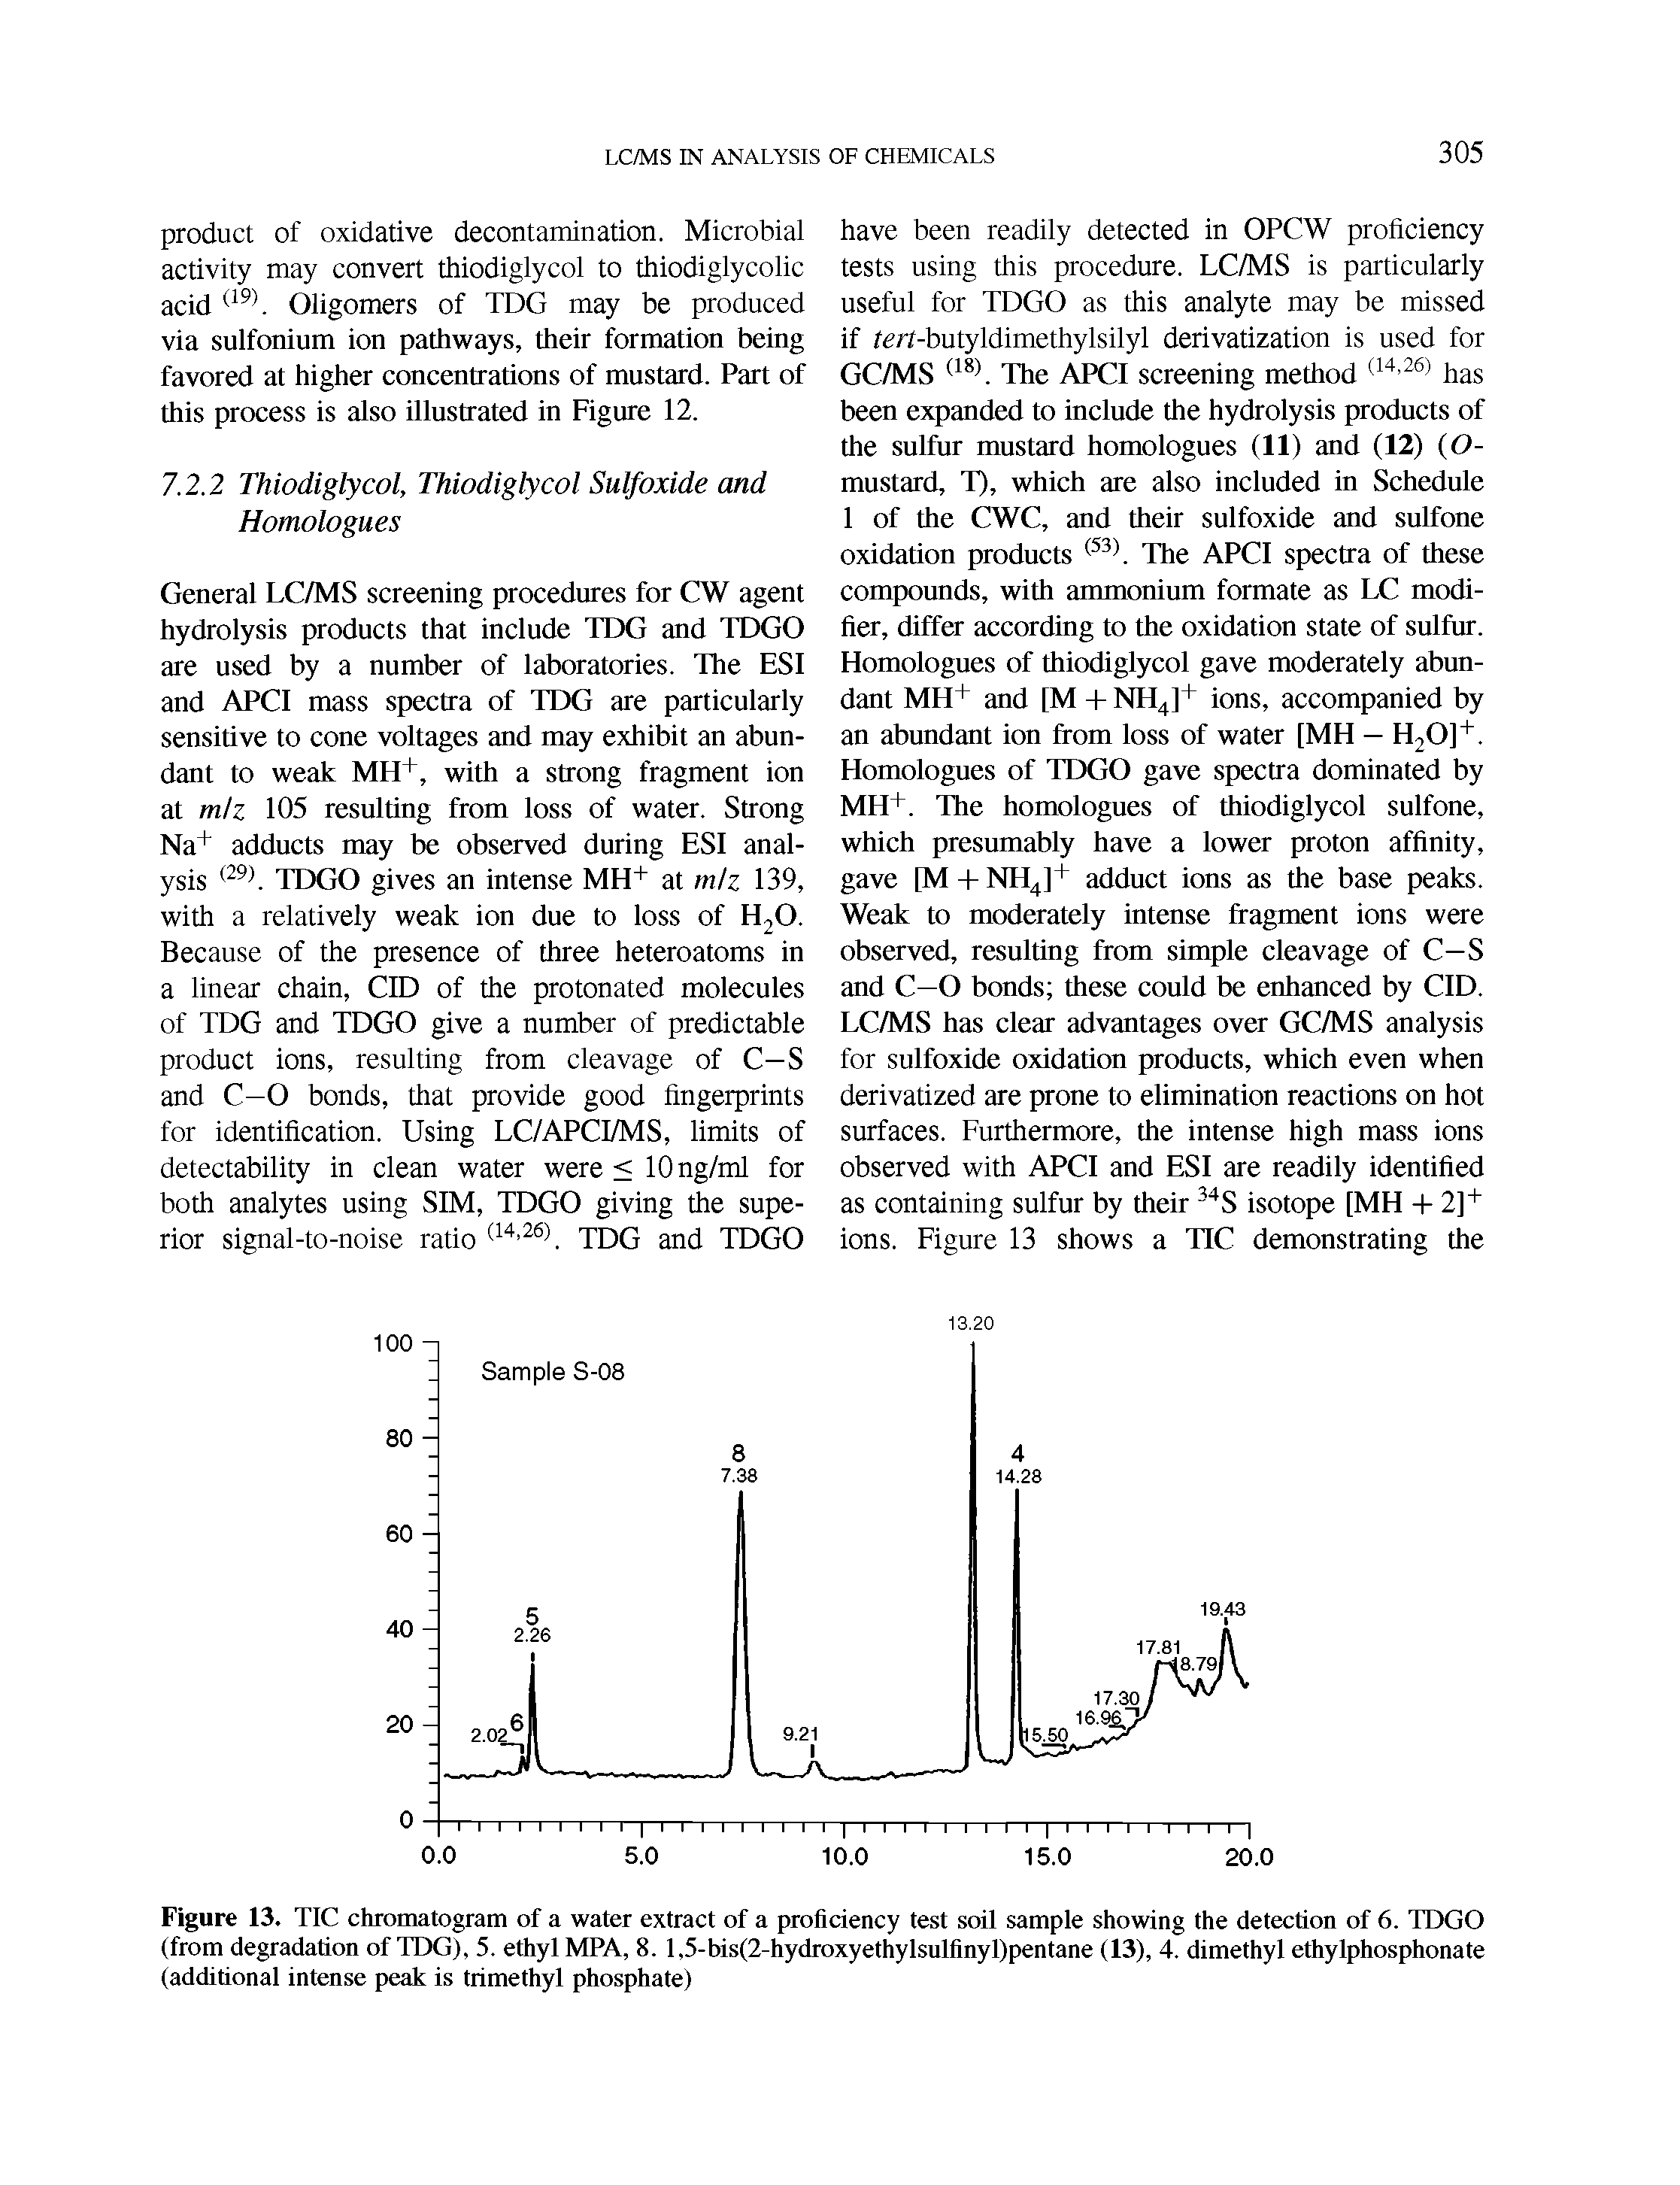 Figure 13. TIC chromatogram of a water extract of a proficiency test soil sample showing the detection of 6. TDGO (from degradation of TDG), 5. ethyl MPA, 8. 1,5-bis(2-hydroxyethylsulfinyl)pentane (13), 4. dimethyl ethylphosphonate (additional intense peak is trimethyl phosphate)...